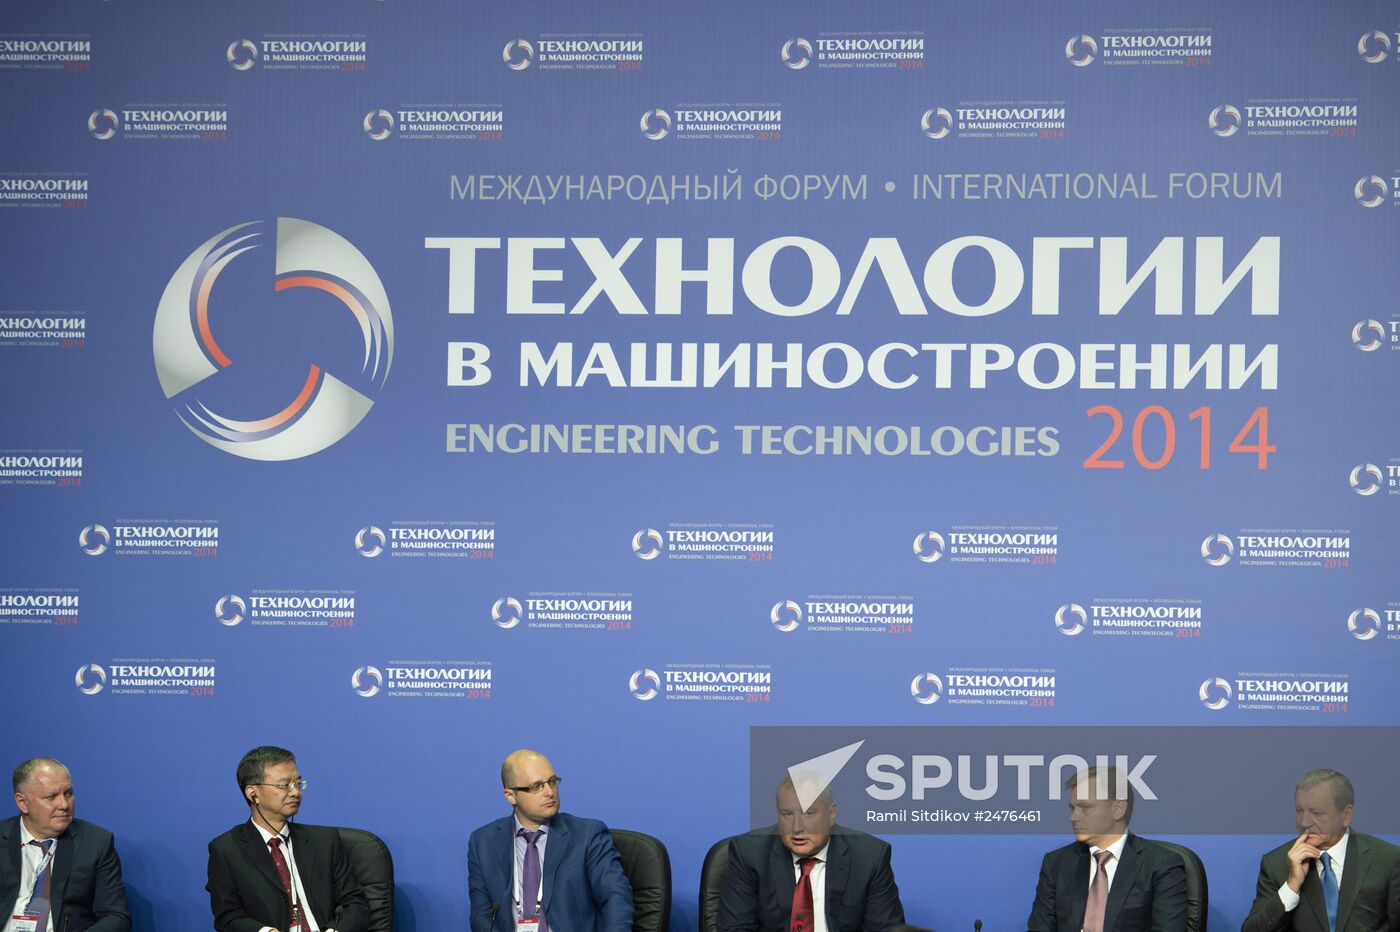 Engineering Technologies 2014 international forum. Day Two